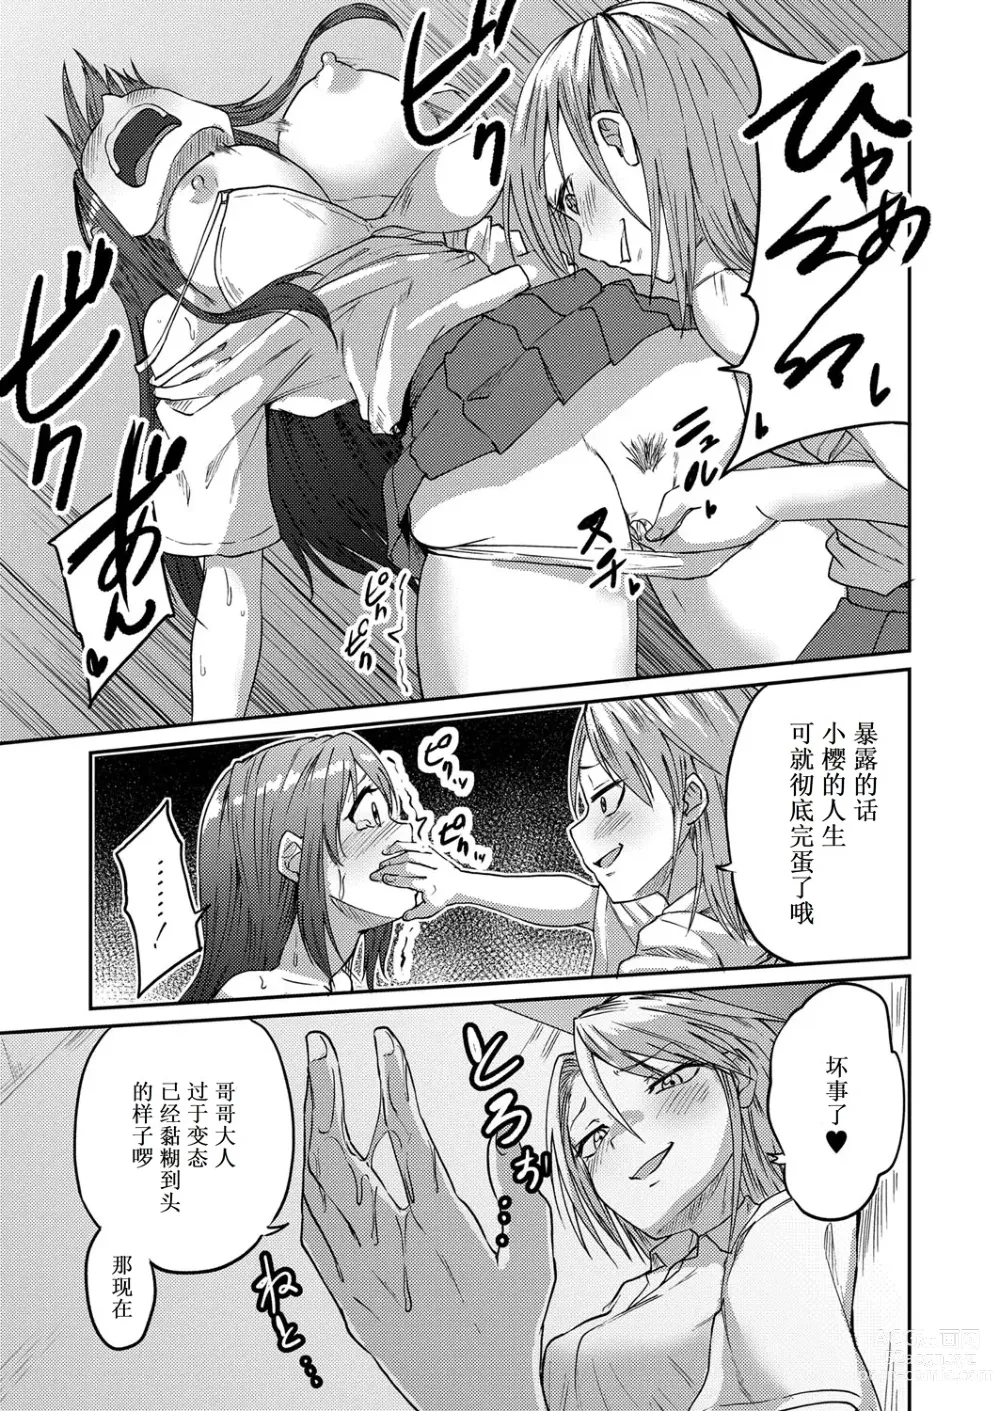 Page 7 of manga IREKAWARI